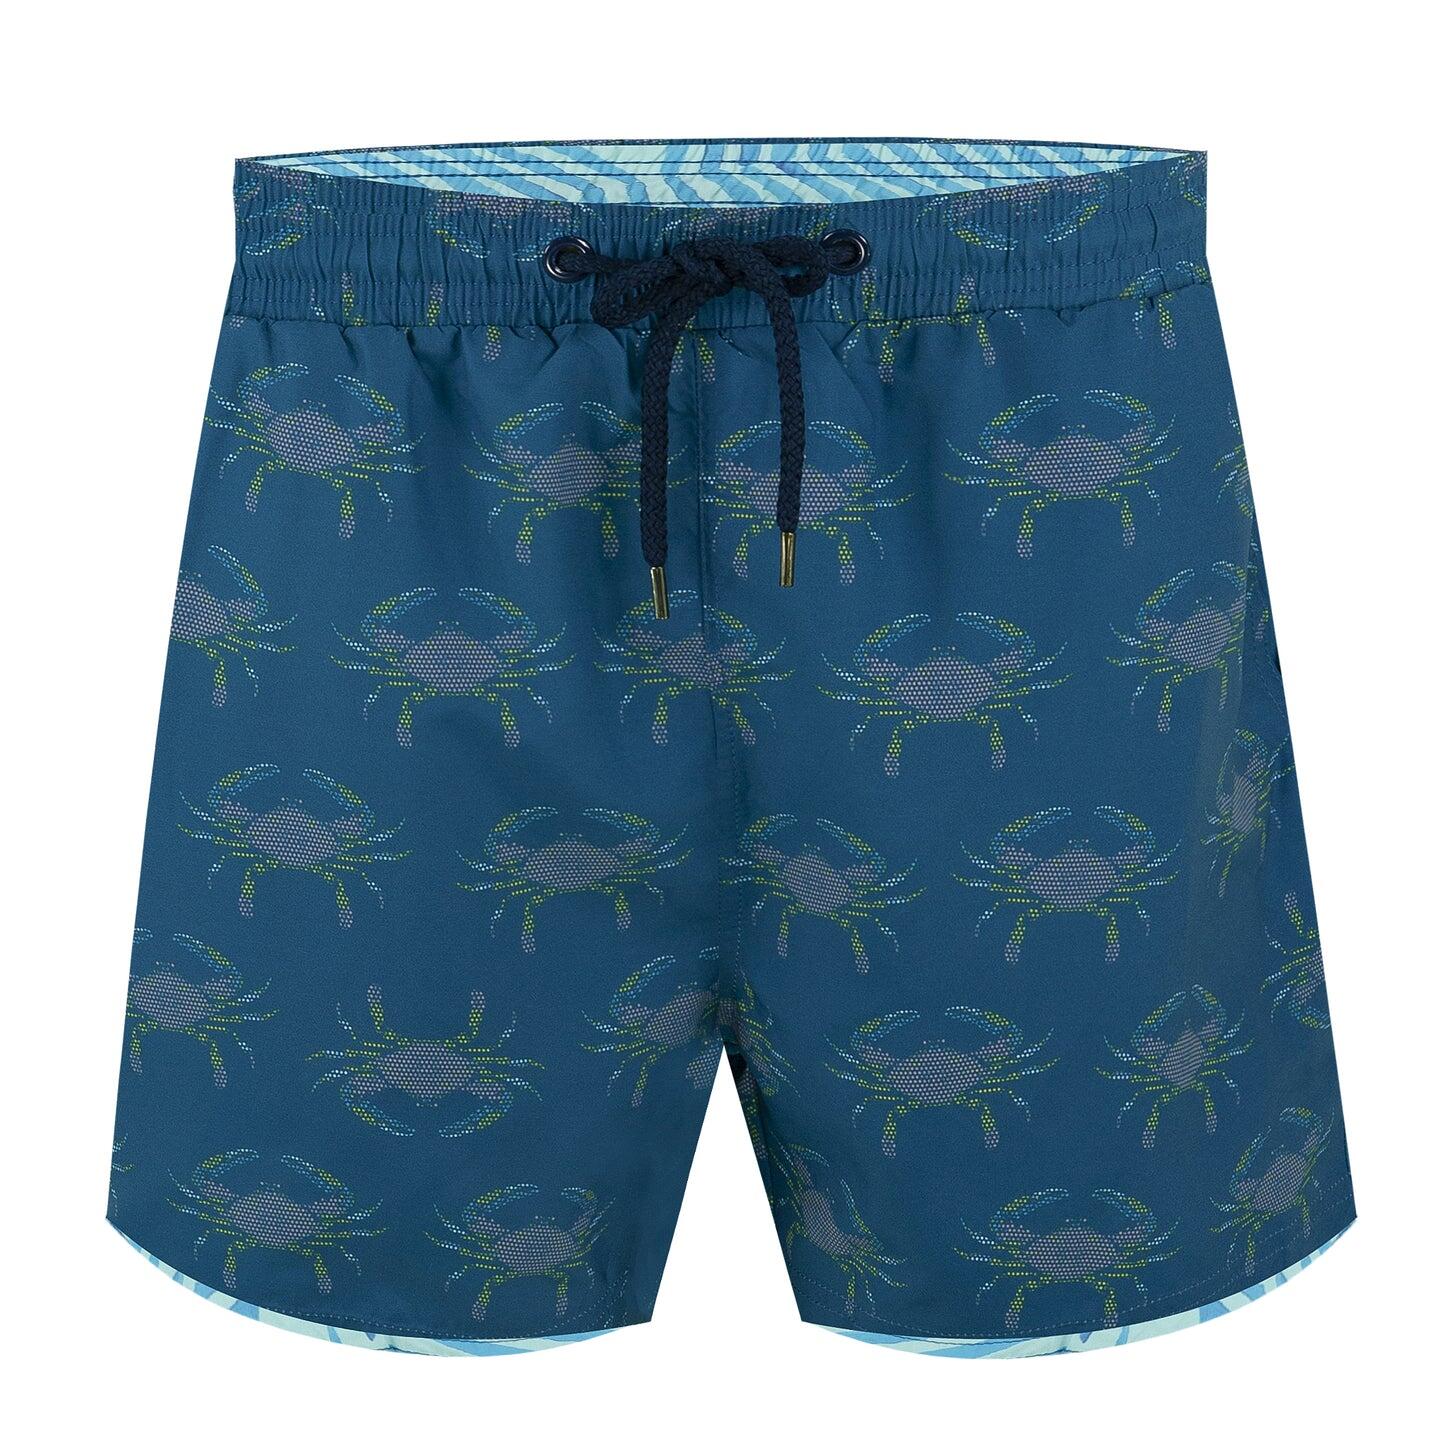 Balmoral Crabs Navy Men's Swim Shorts